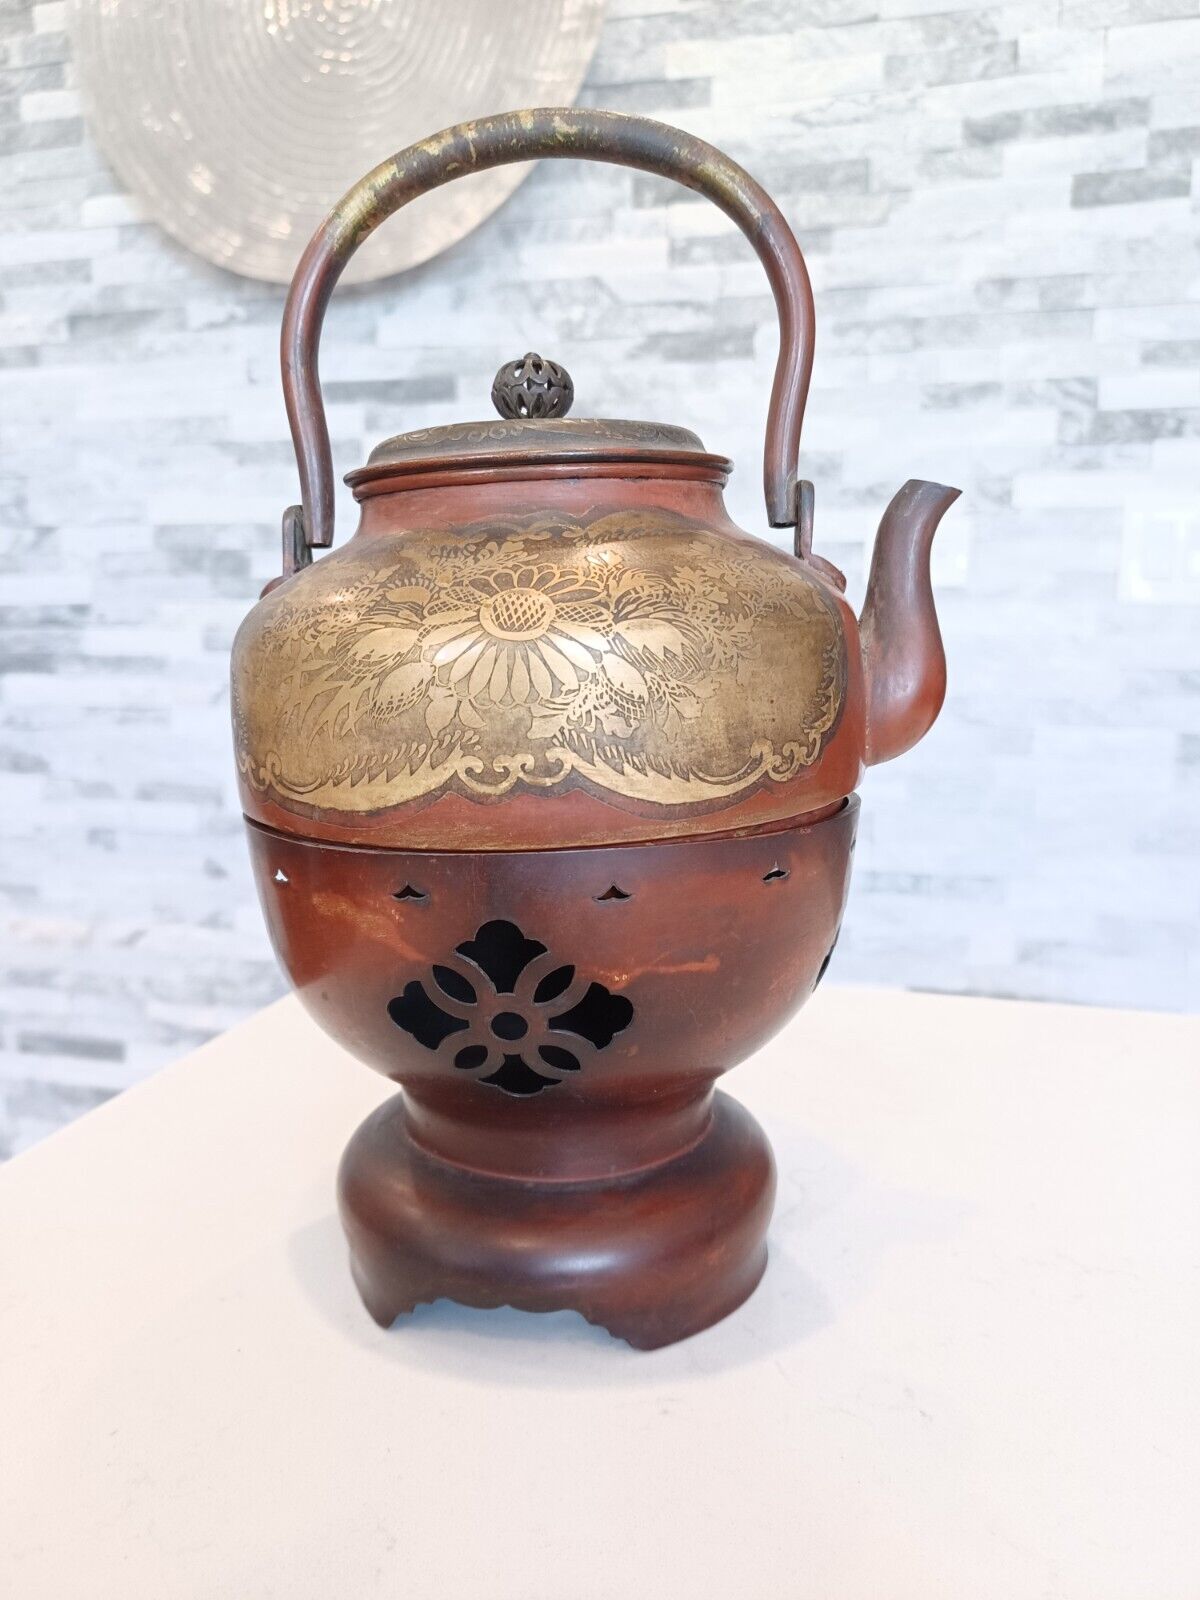 3 piece Ornate Victorian Brass Copper Tea Kettle without burner